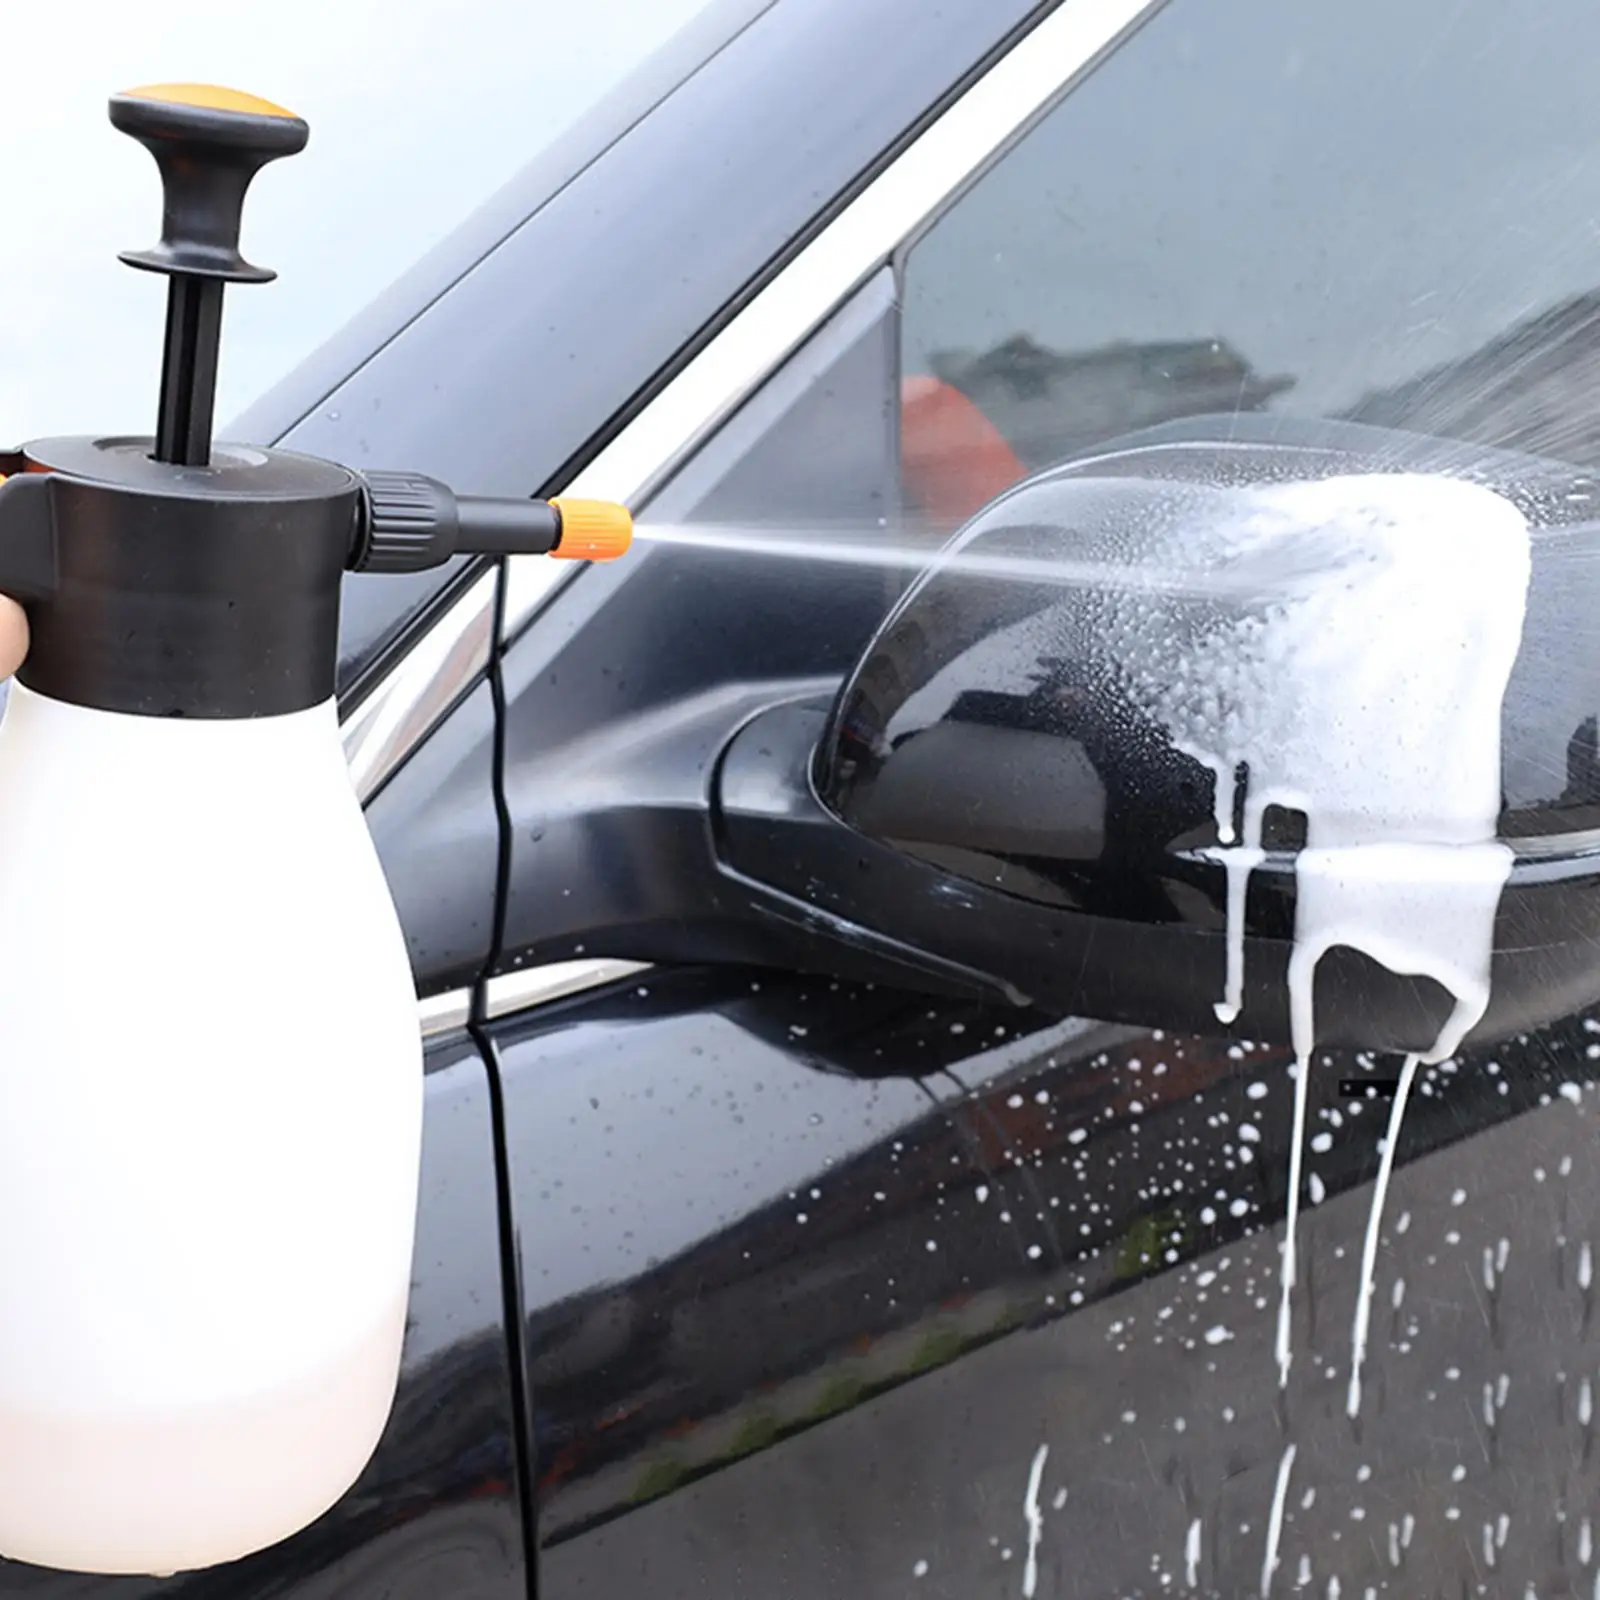 Foam Watering Can High Pressure Foam Gun Fits for Car Washing Patio Plants Watering